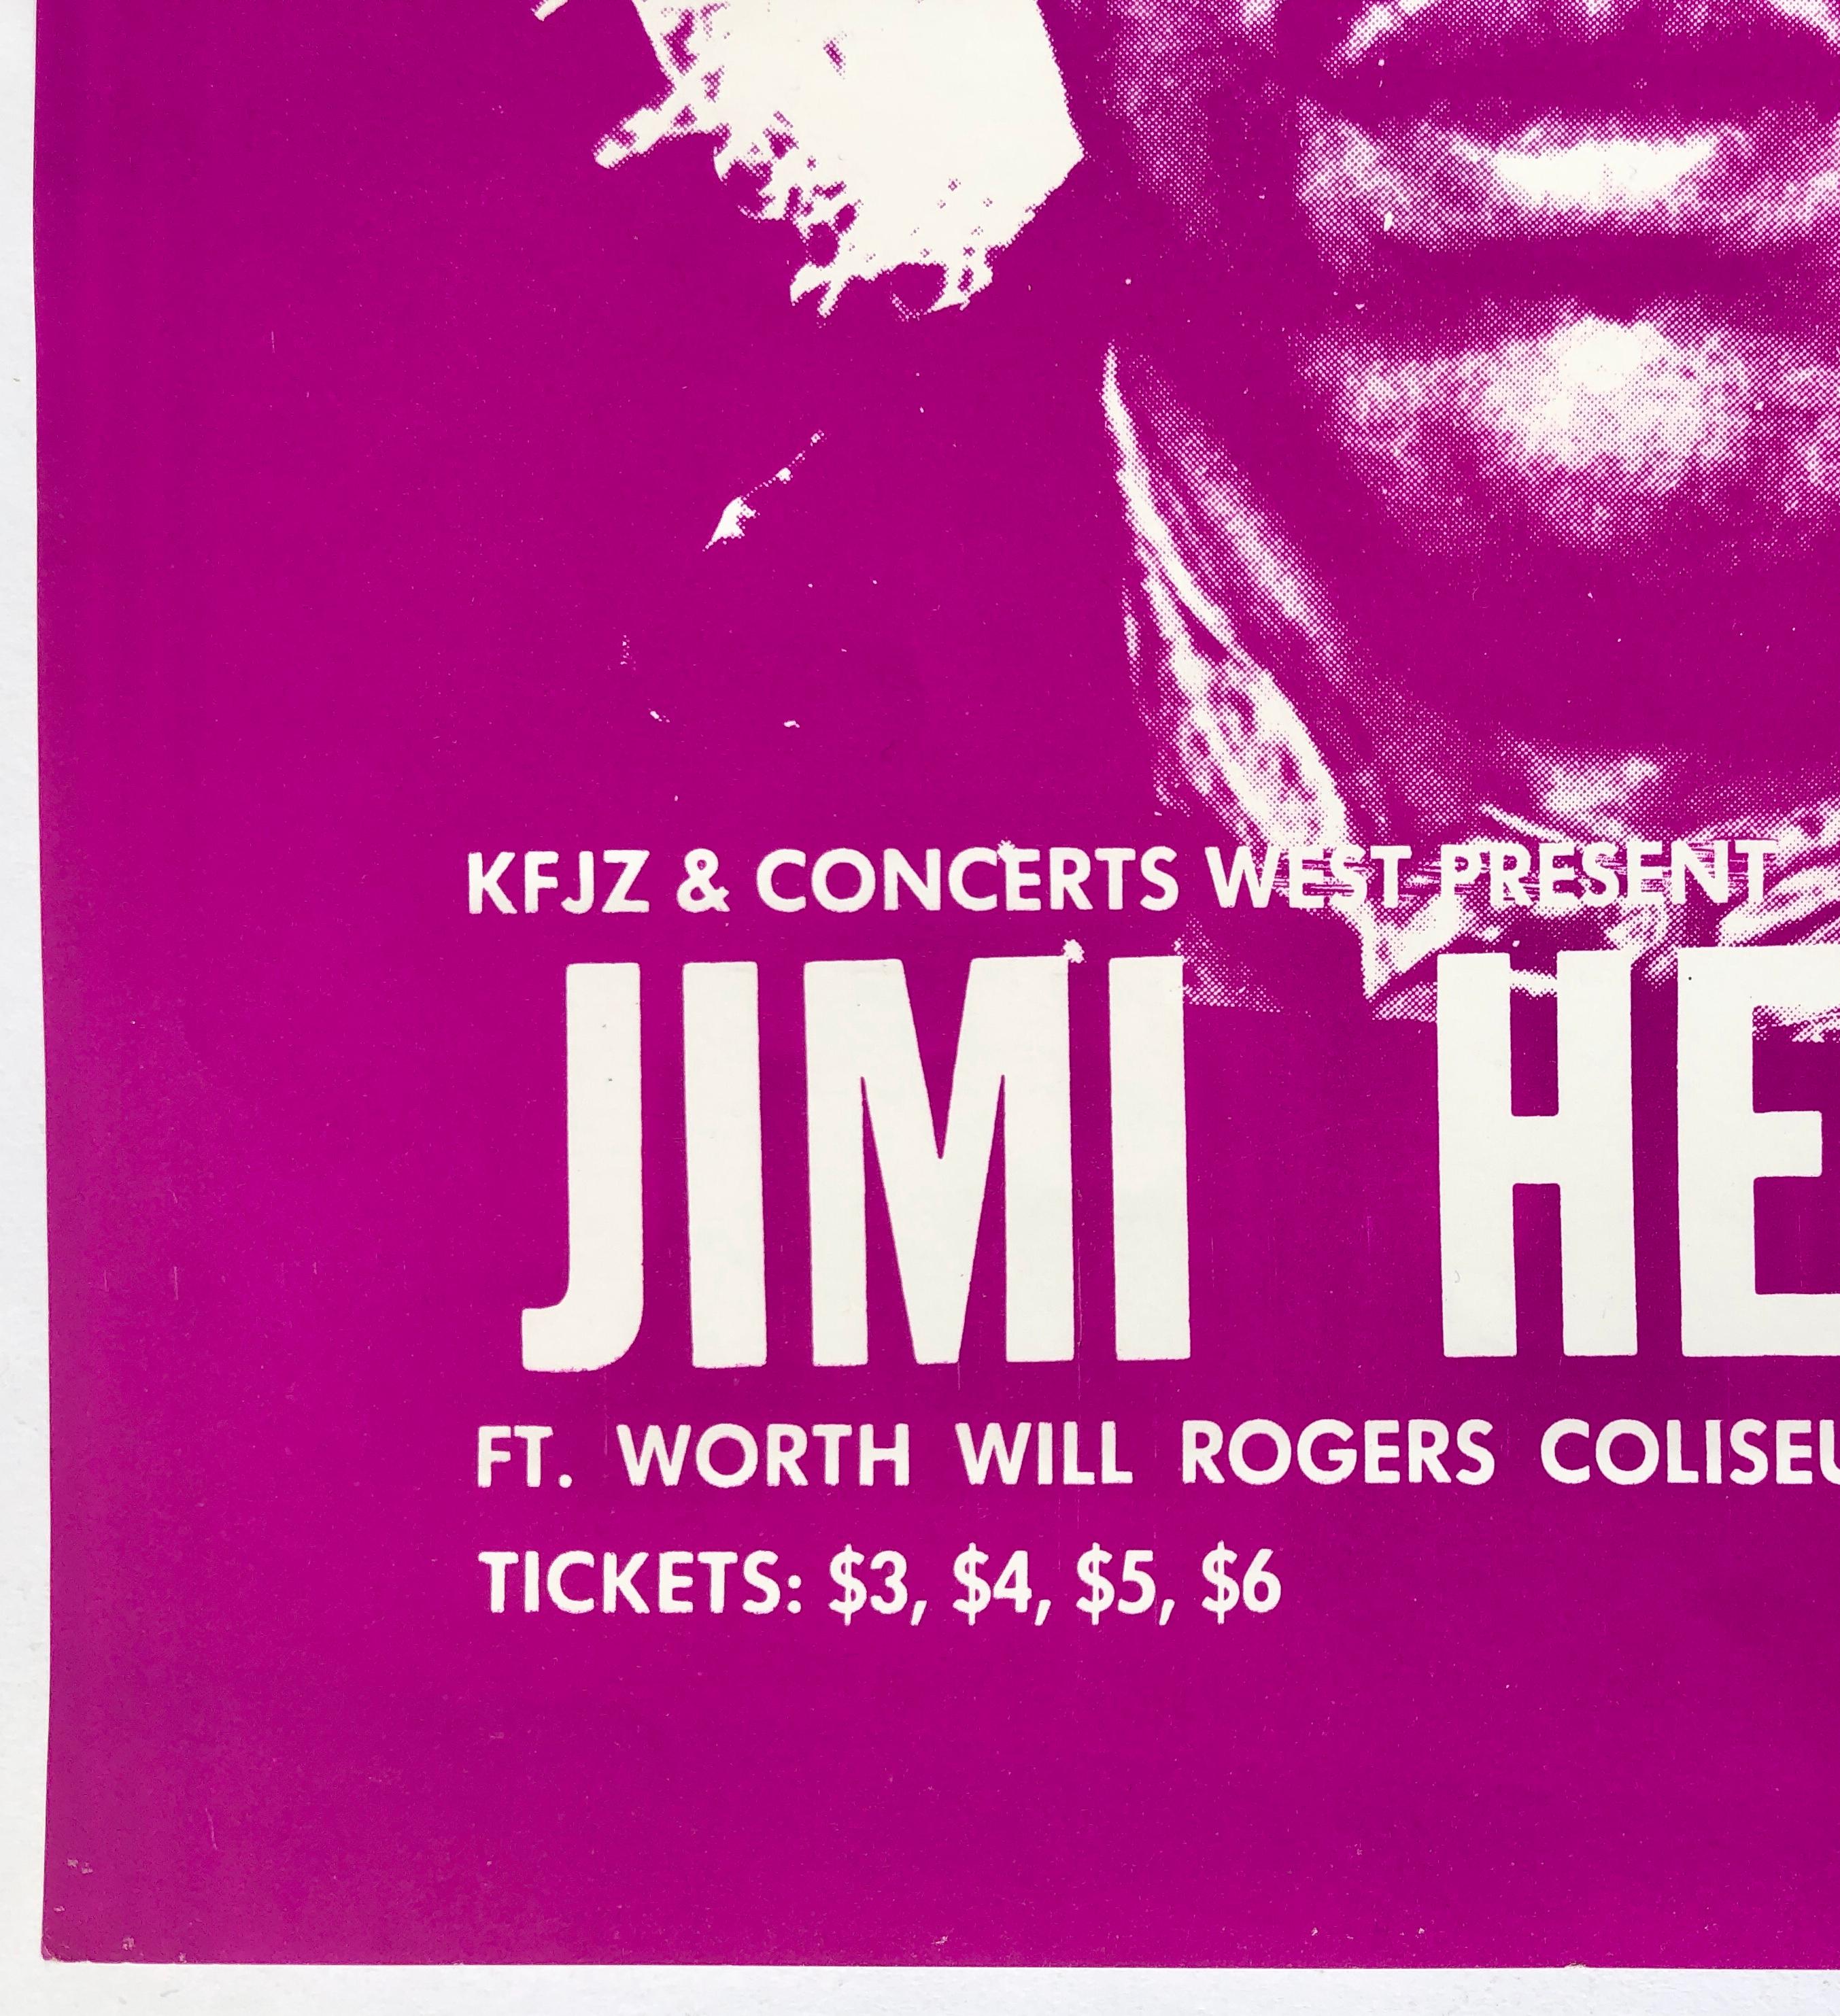 Post-Modern Jimi Hendrix Original Vintage Concert Handbill Poster, Ft. Worth, Texas, 1970